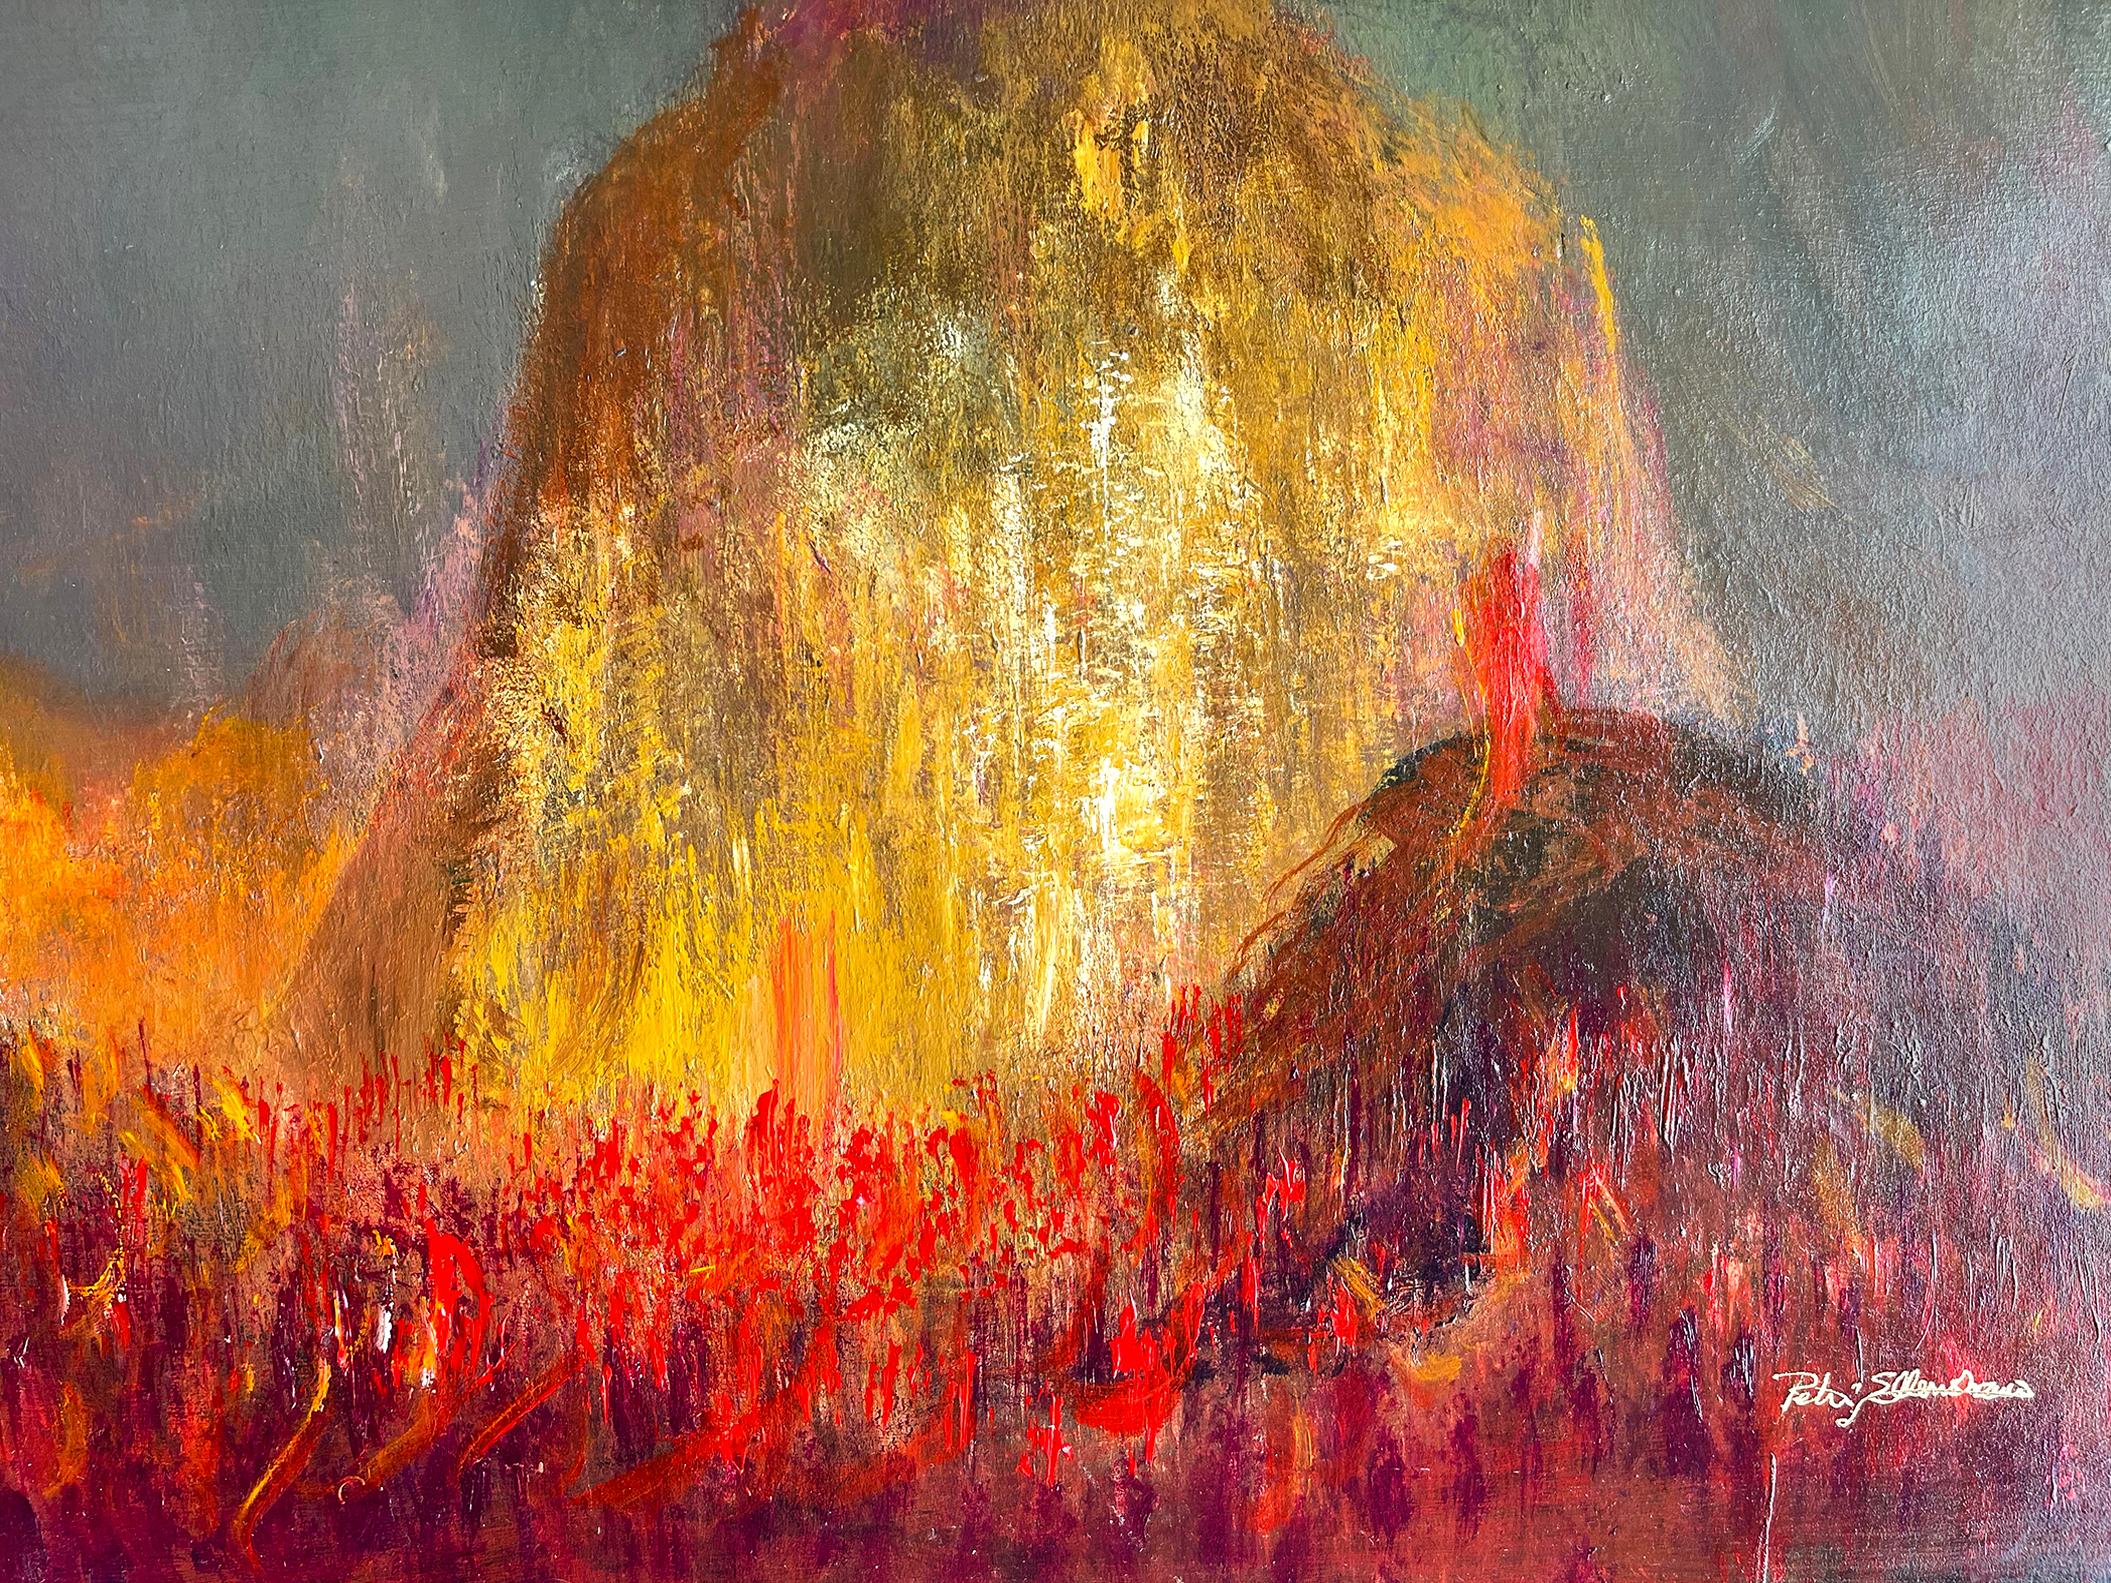 Volcano-Eruption – Explosive Fire Lava-Flow from Hell – Painting von Peter Ellenshaw